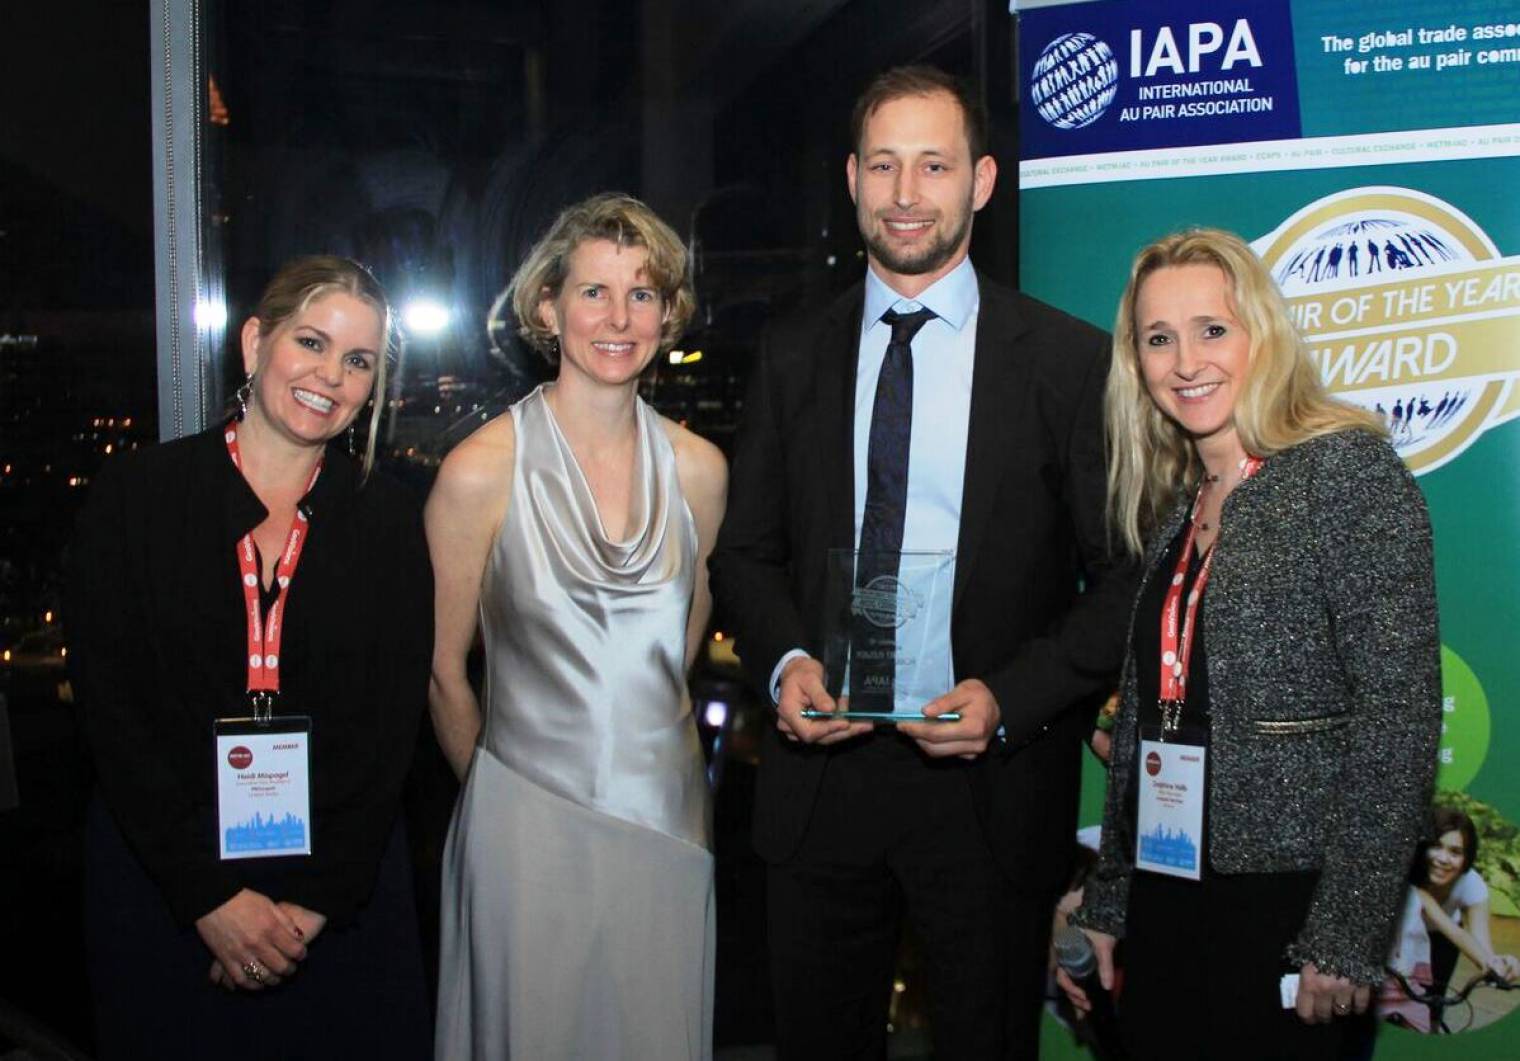 IAPA Au Pair of the Year 2016 announced at WETM-IAC: Congratulations Robert Isemer!